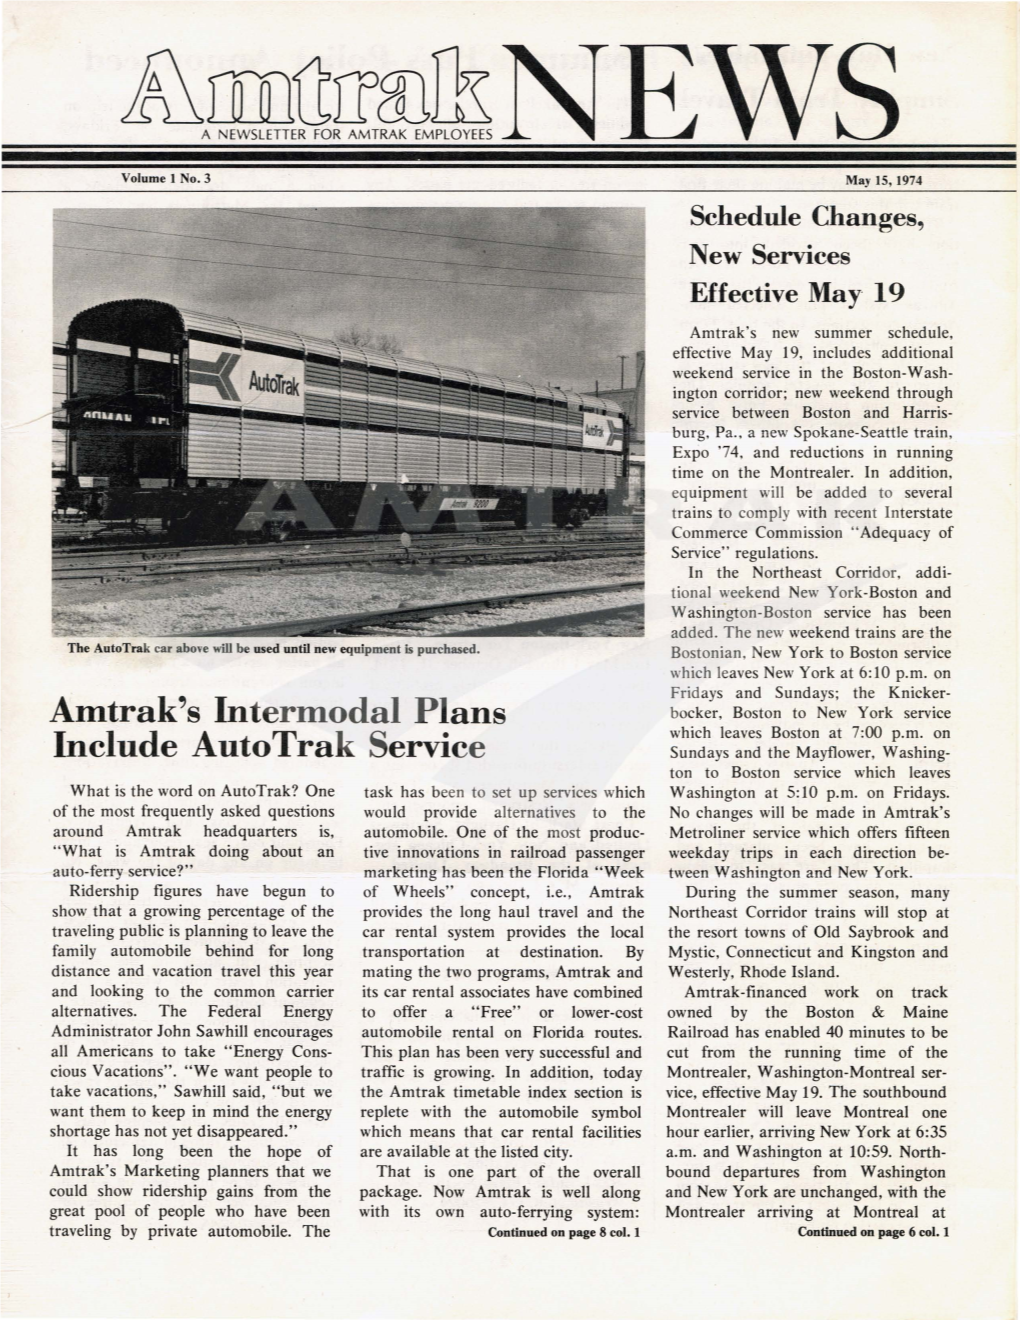 Amtrak's Intermodal Plans Include Autotrak Service